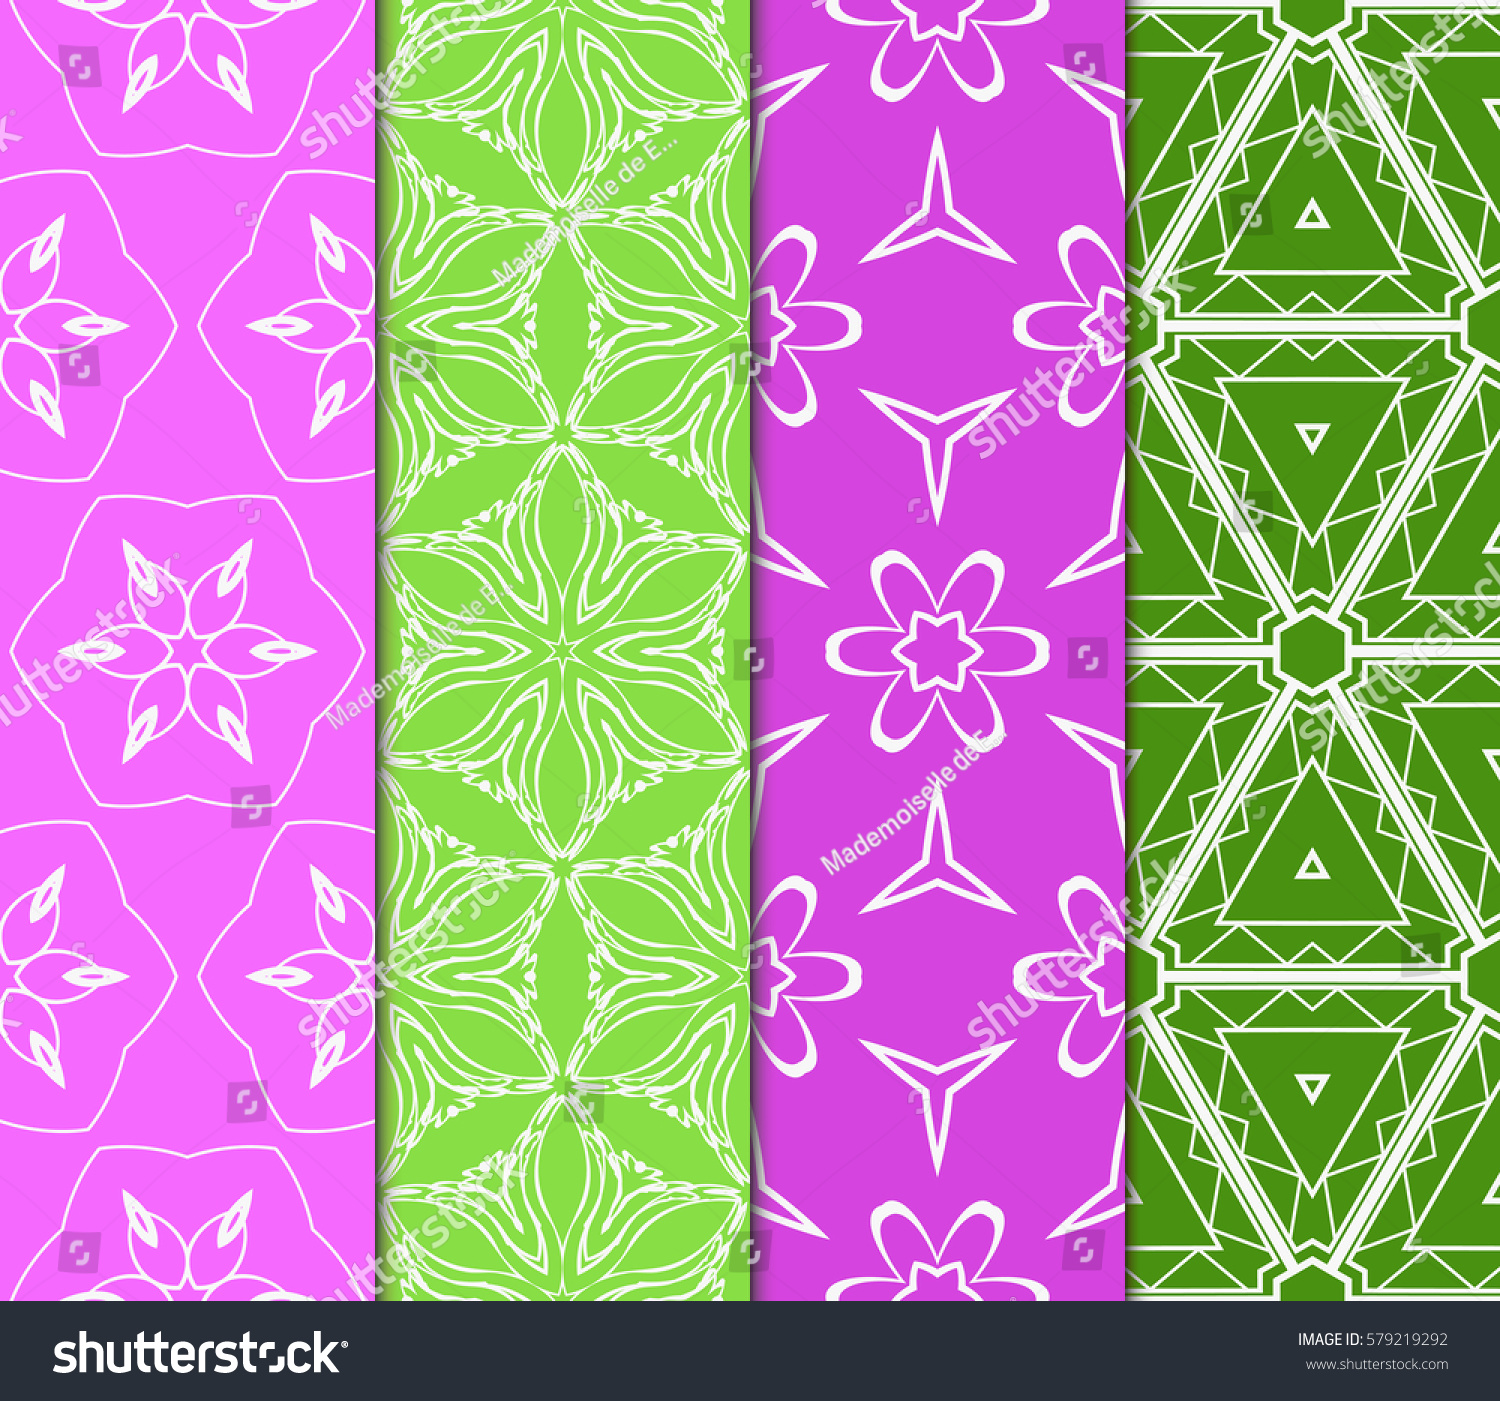 set of Decorative floral ornament. geometric seamless pattern. vector illustration. for interior design, wallpaper, invitation, fabric, decor #579219292